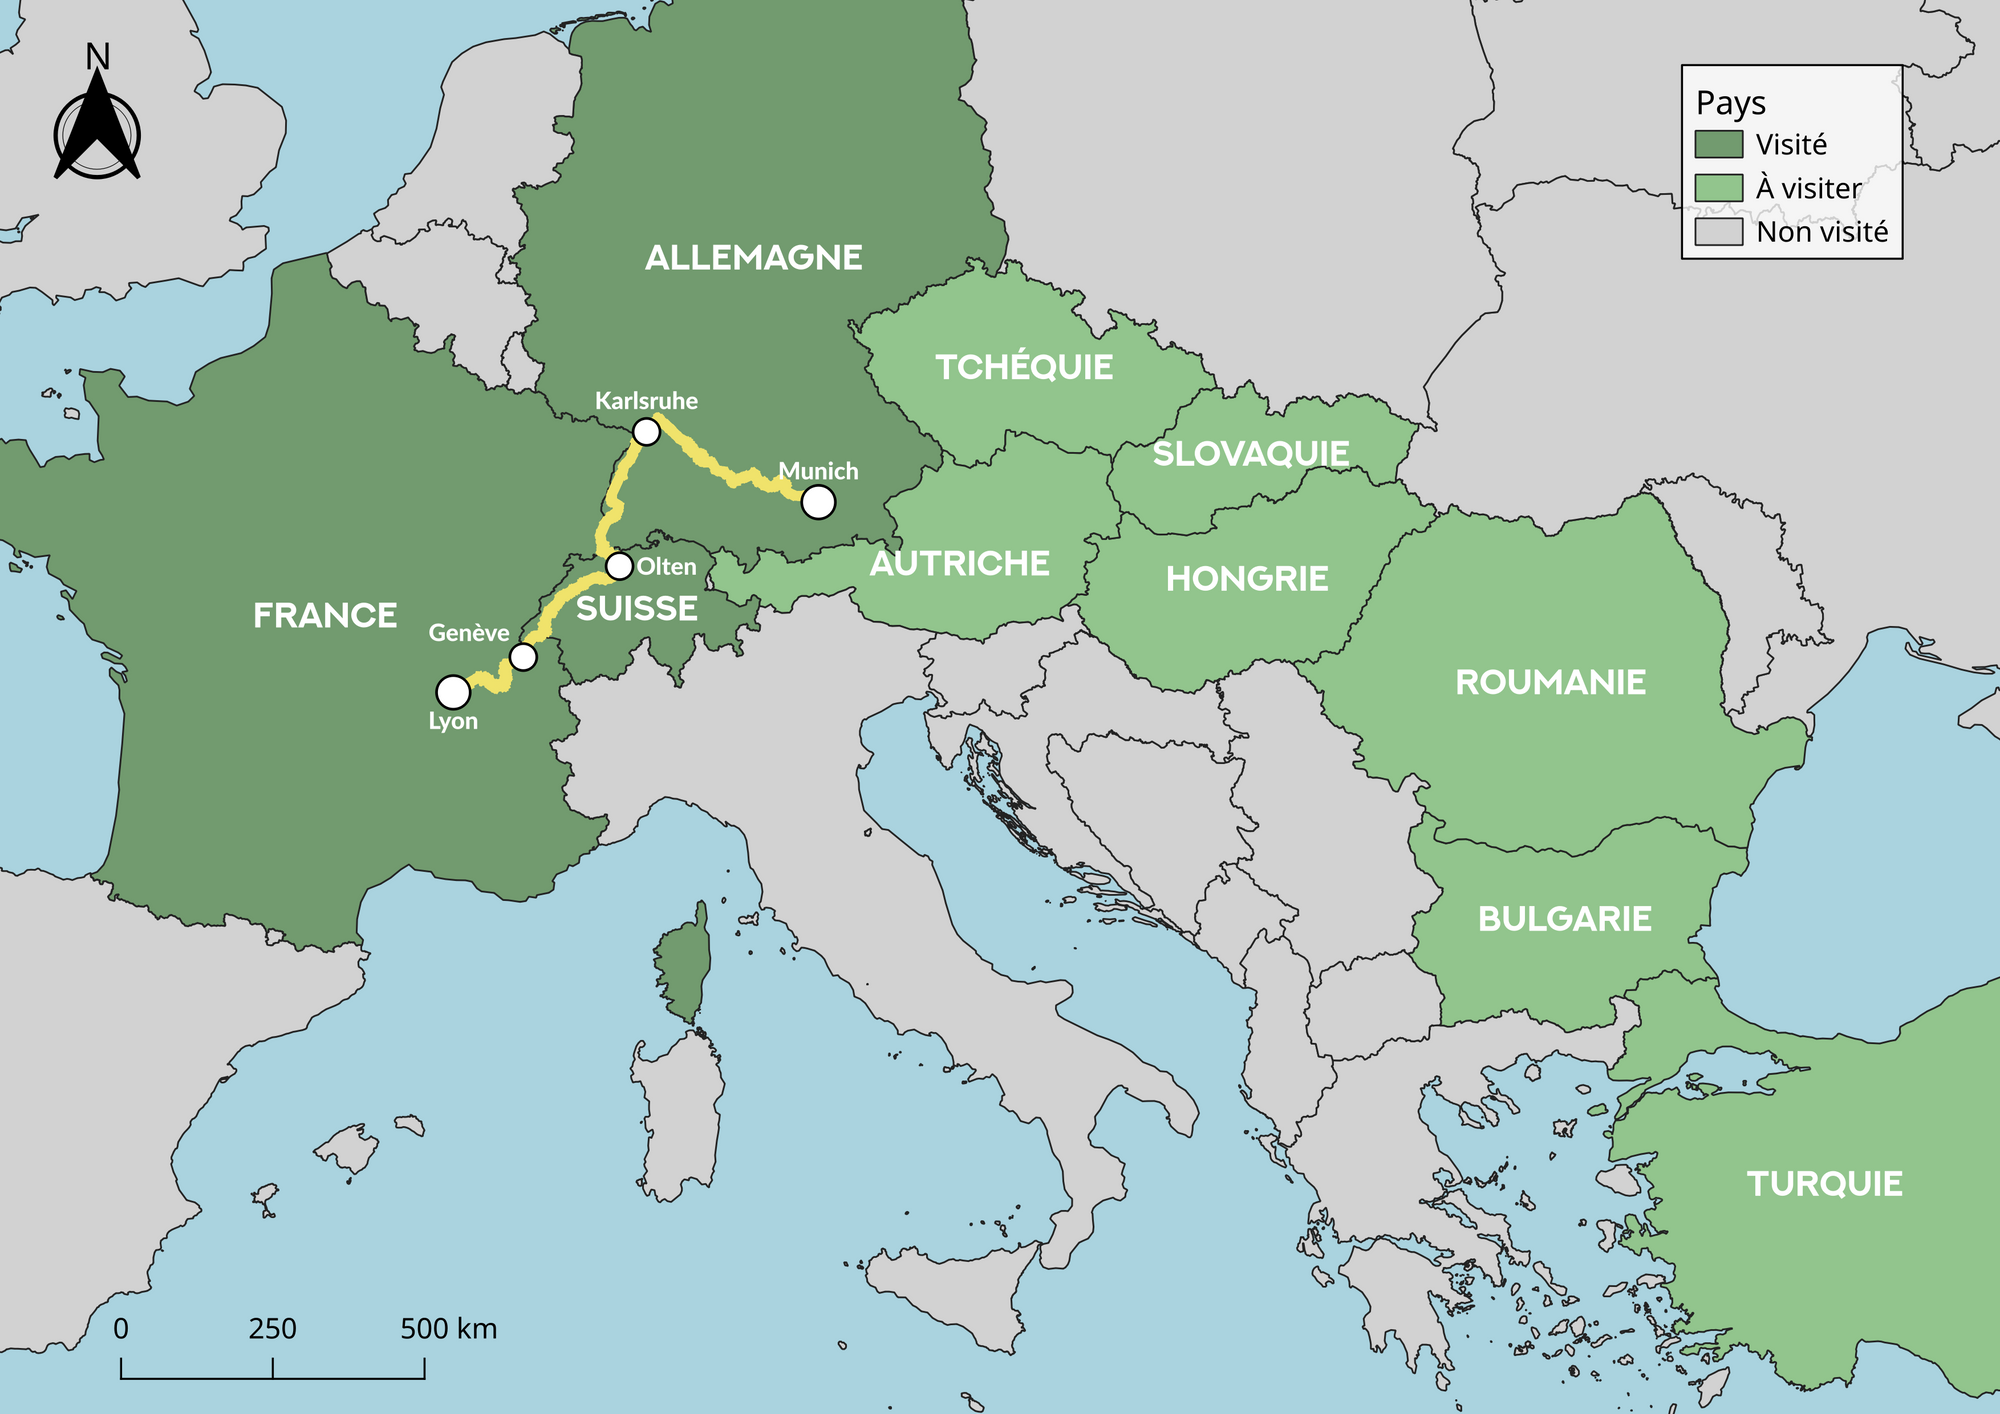 Carte de l'Europe indiquant le trajet en train : Lyon - Genève - Olten - Karlsruhe - Munich